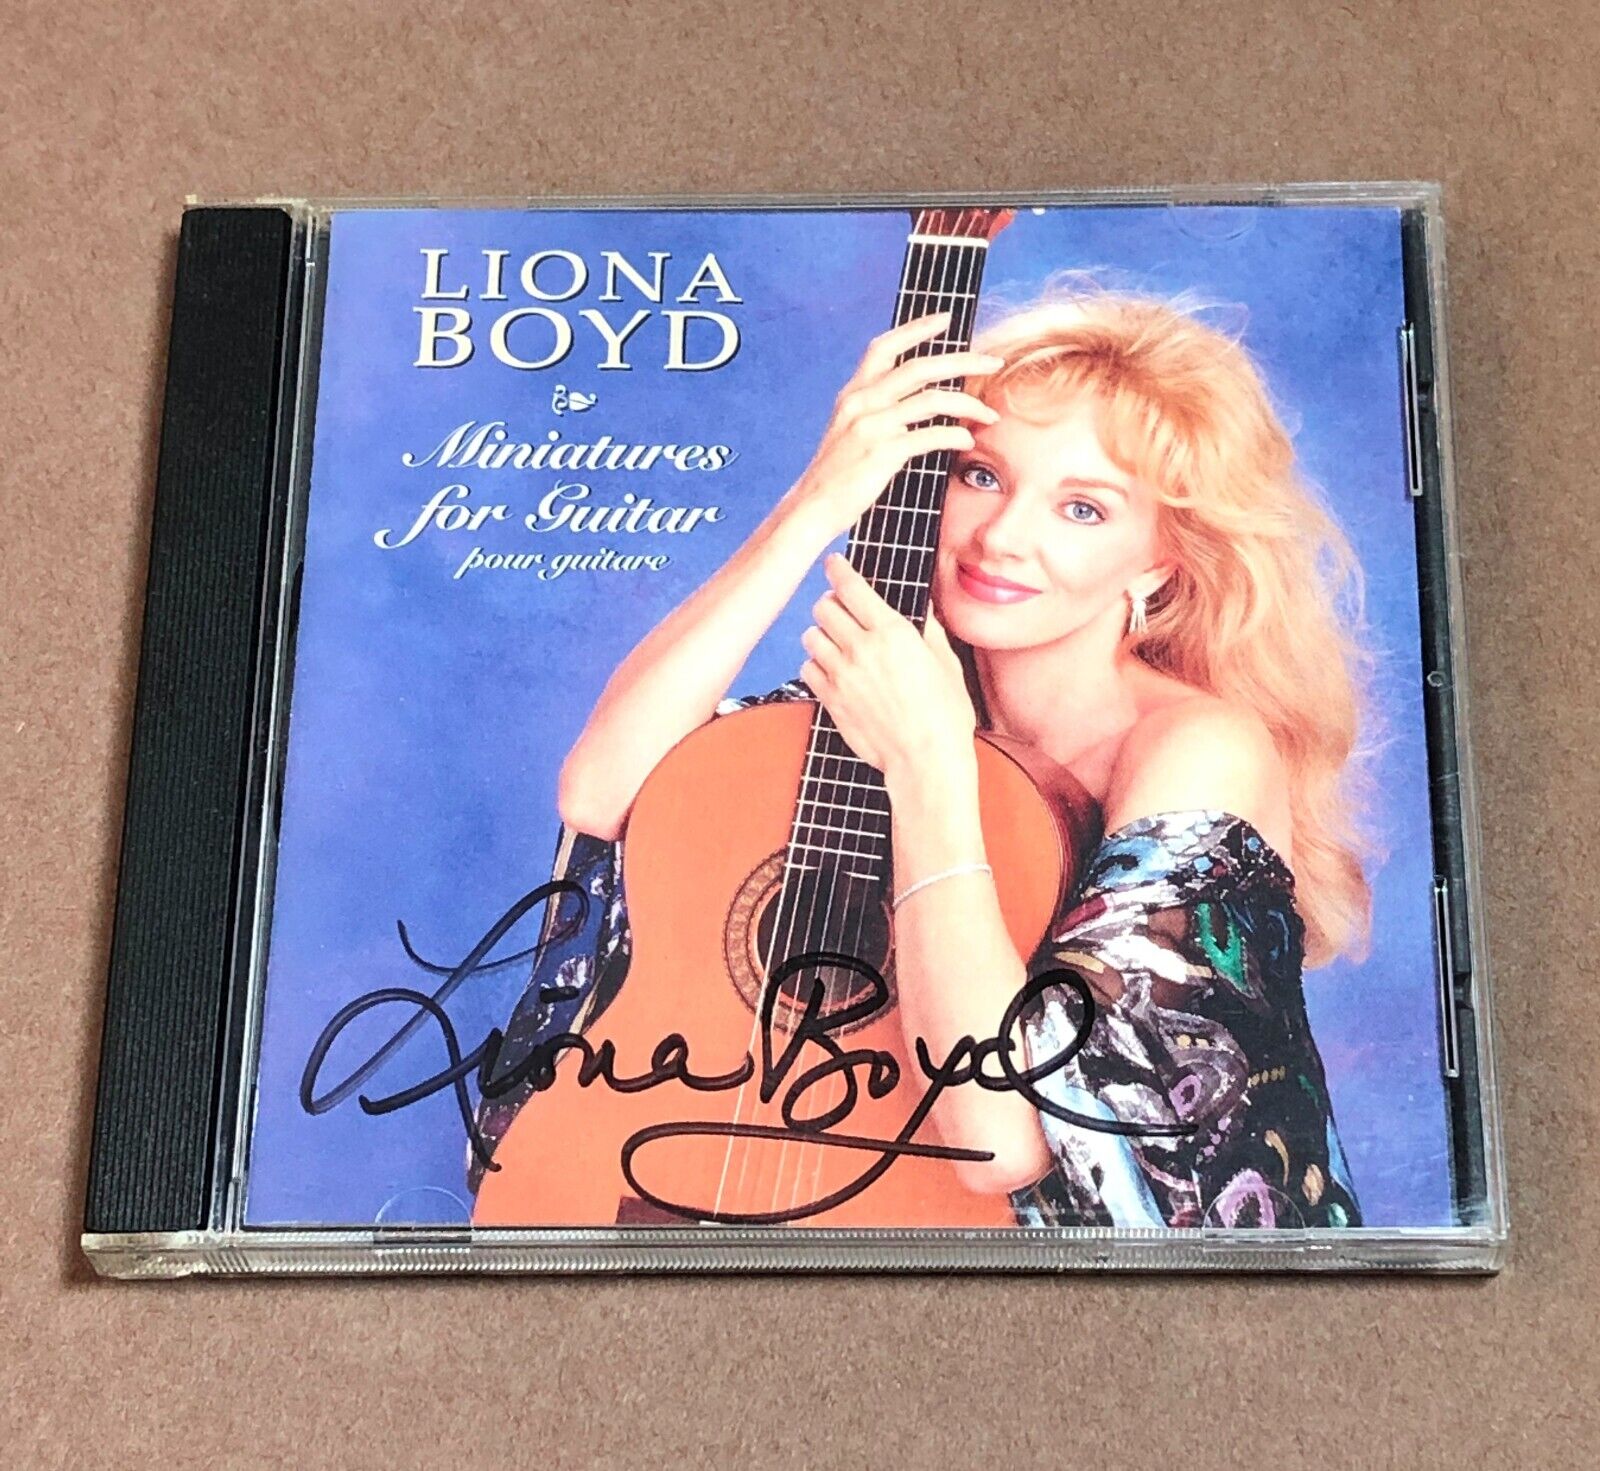 SIGNED Liona Boyd CD Miniatures for Guitar Pour Guiture Autographed